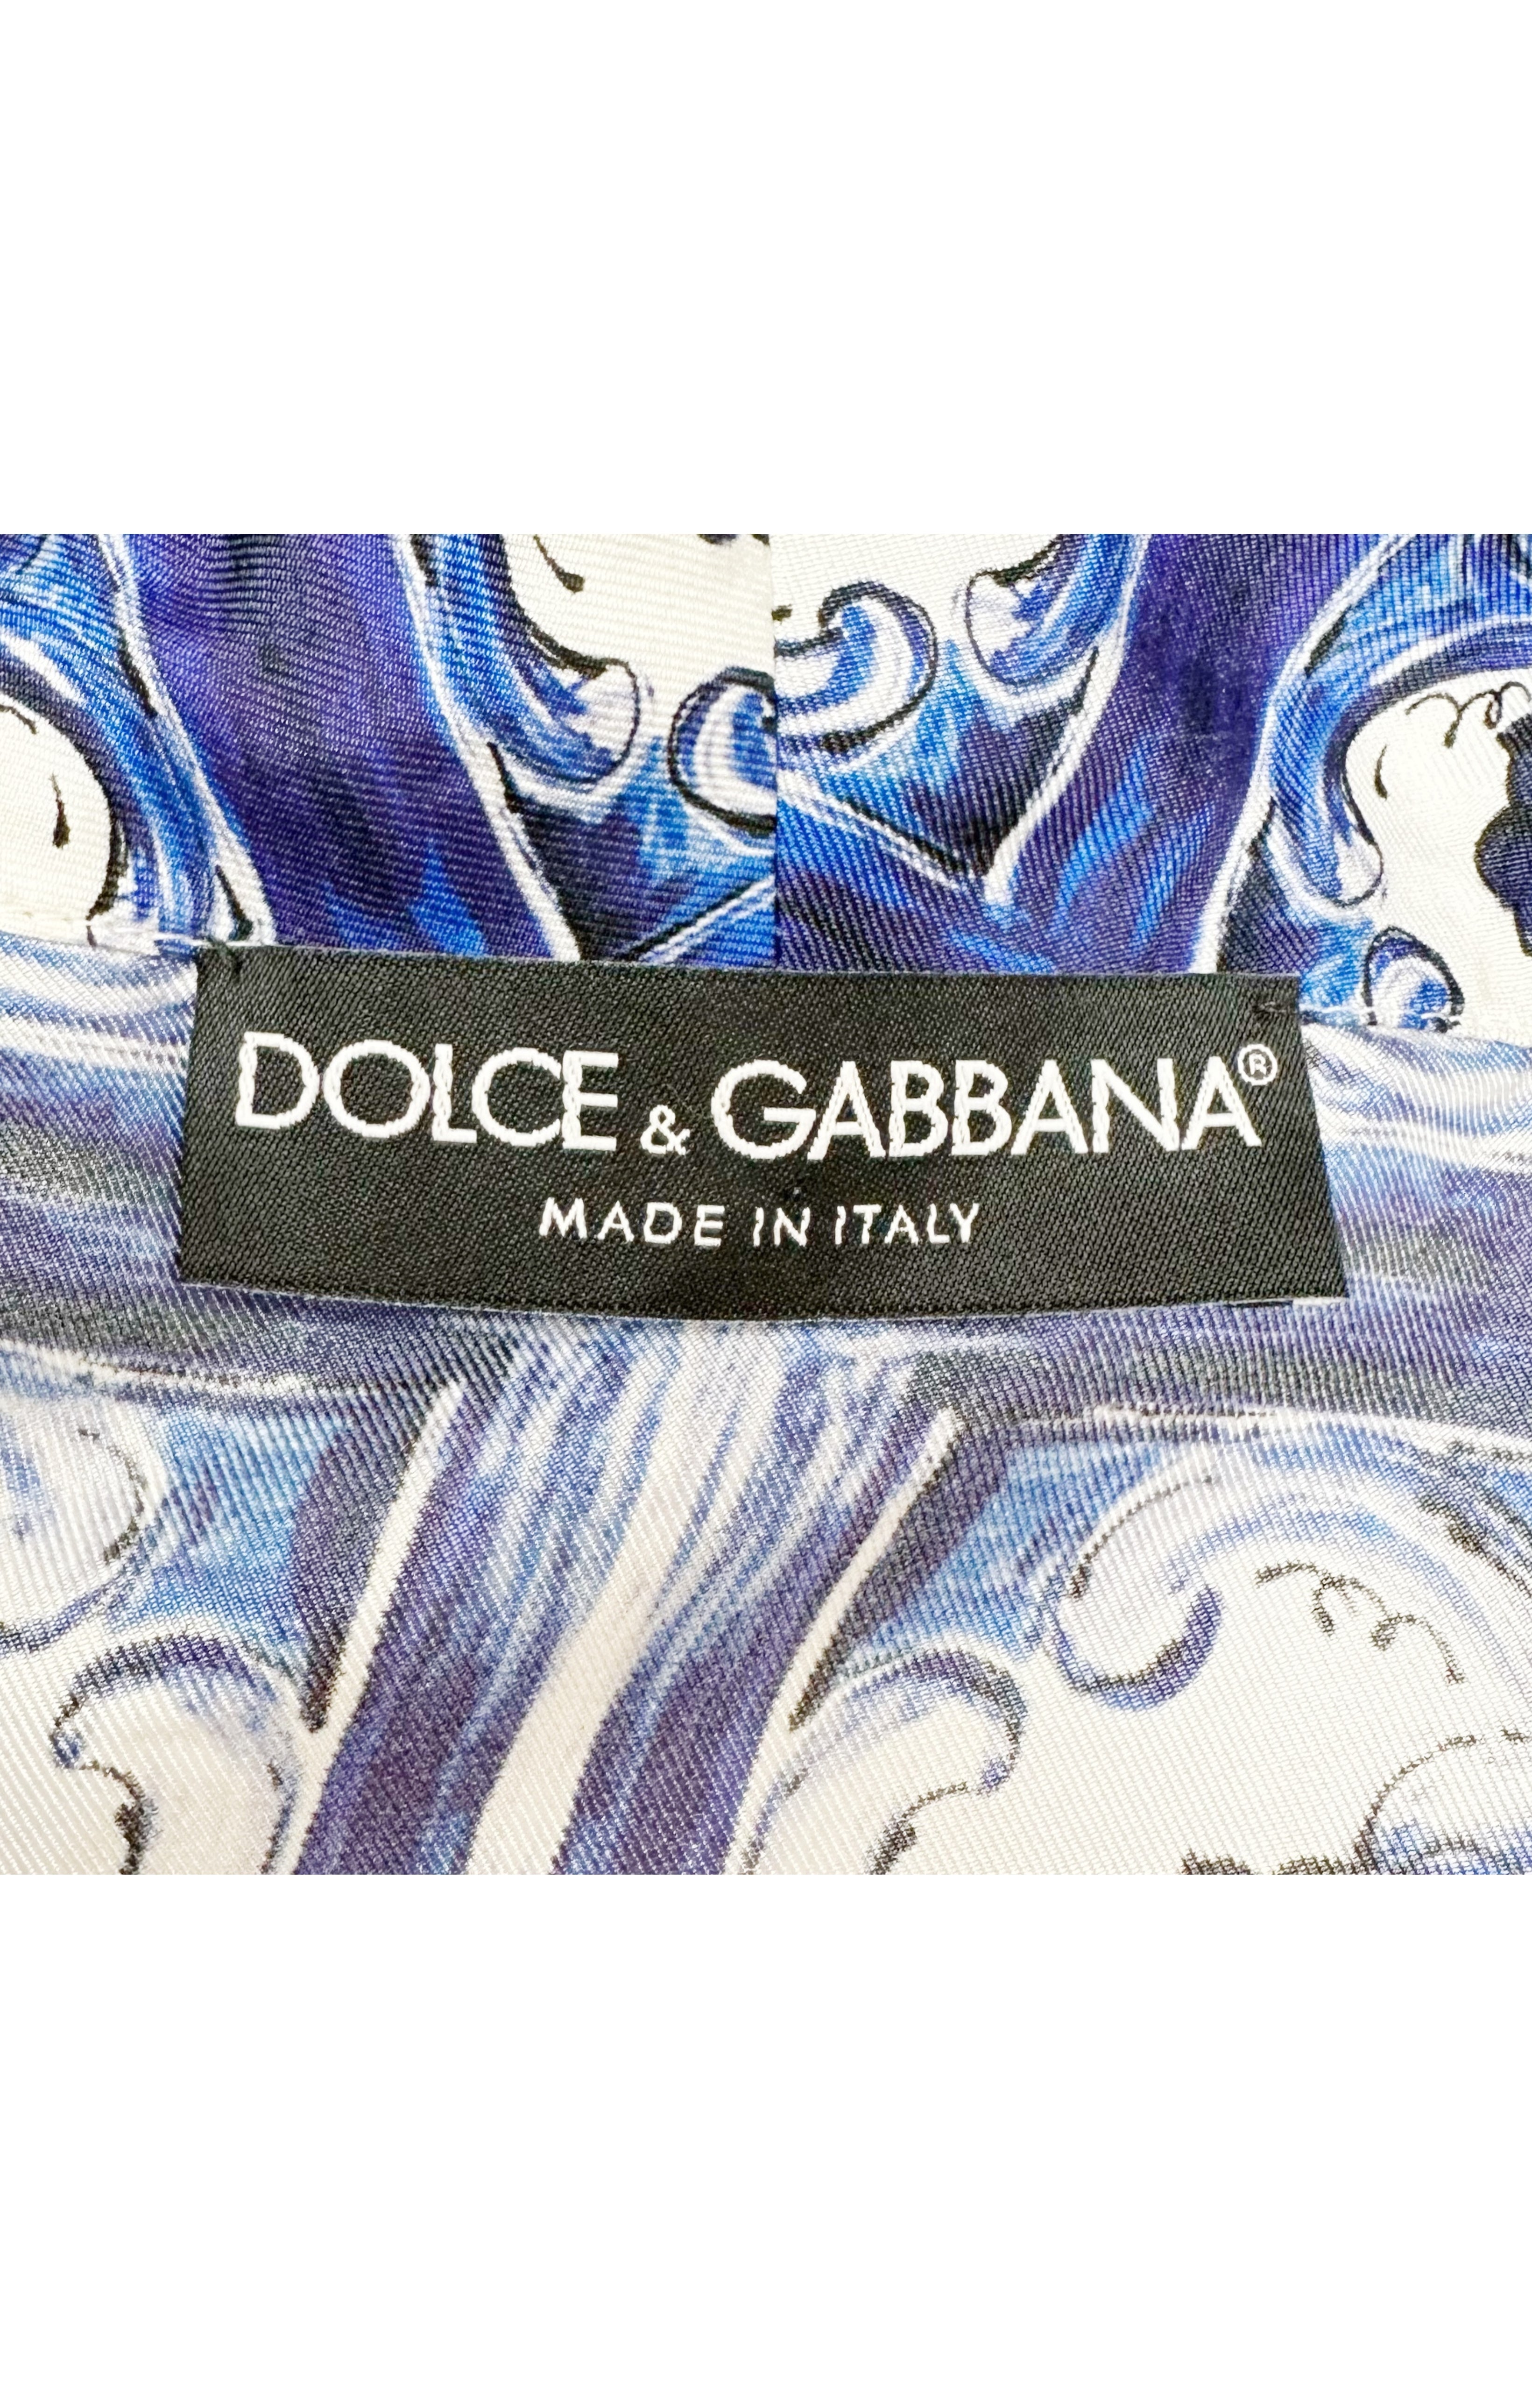 DOLCE & GABBANA Robe Size: No size tags, fits like US 6